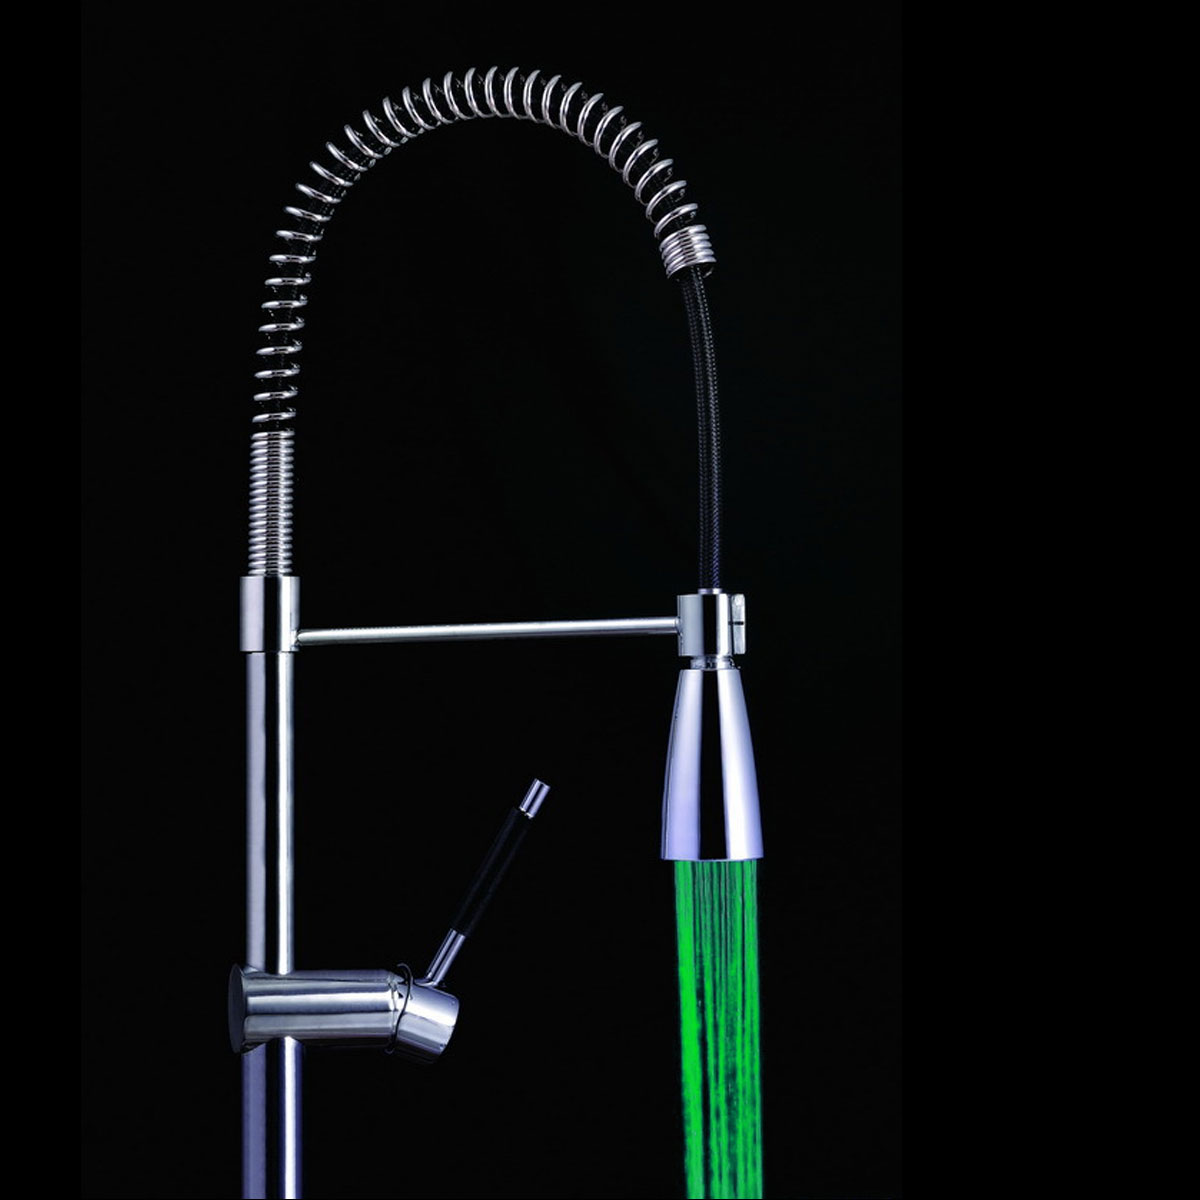 LED-Bathroom-Faucets-Temperature-Control-Spontaneous-3-Colors-Change-Light-Tap-Temperature-Sensor-Mi-1258945